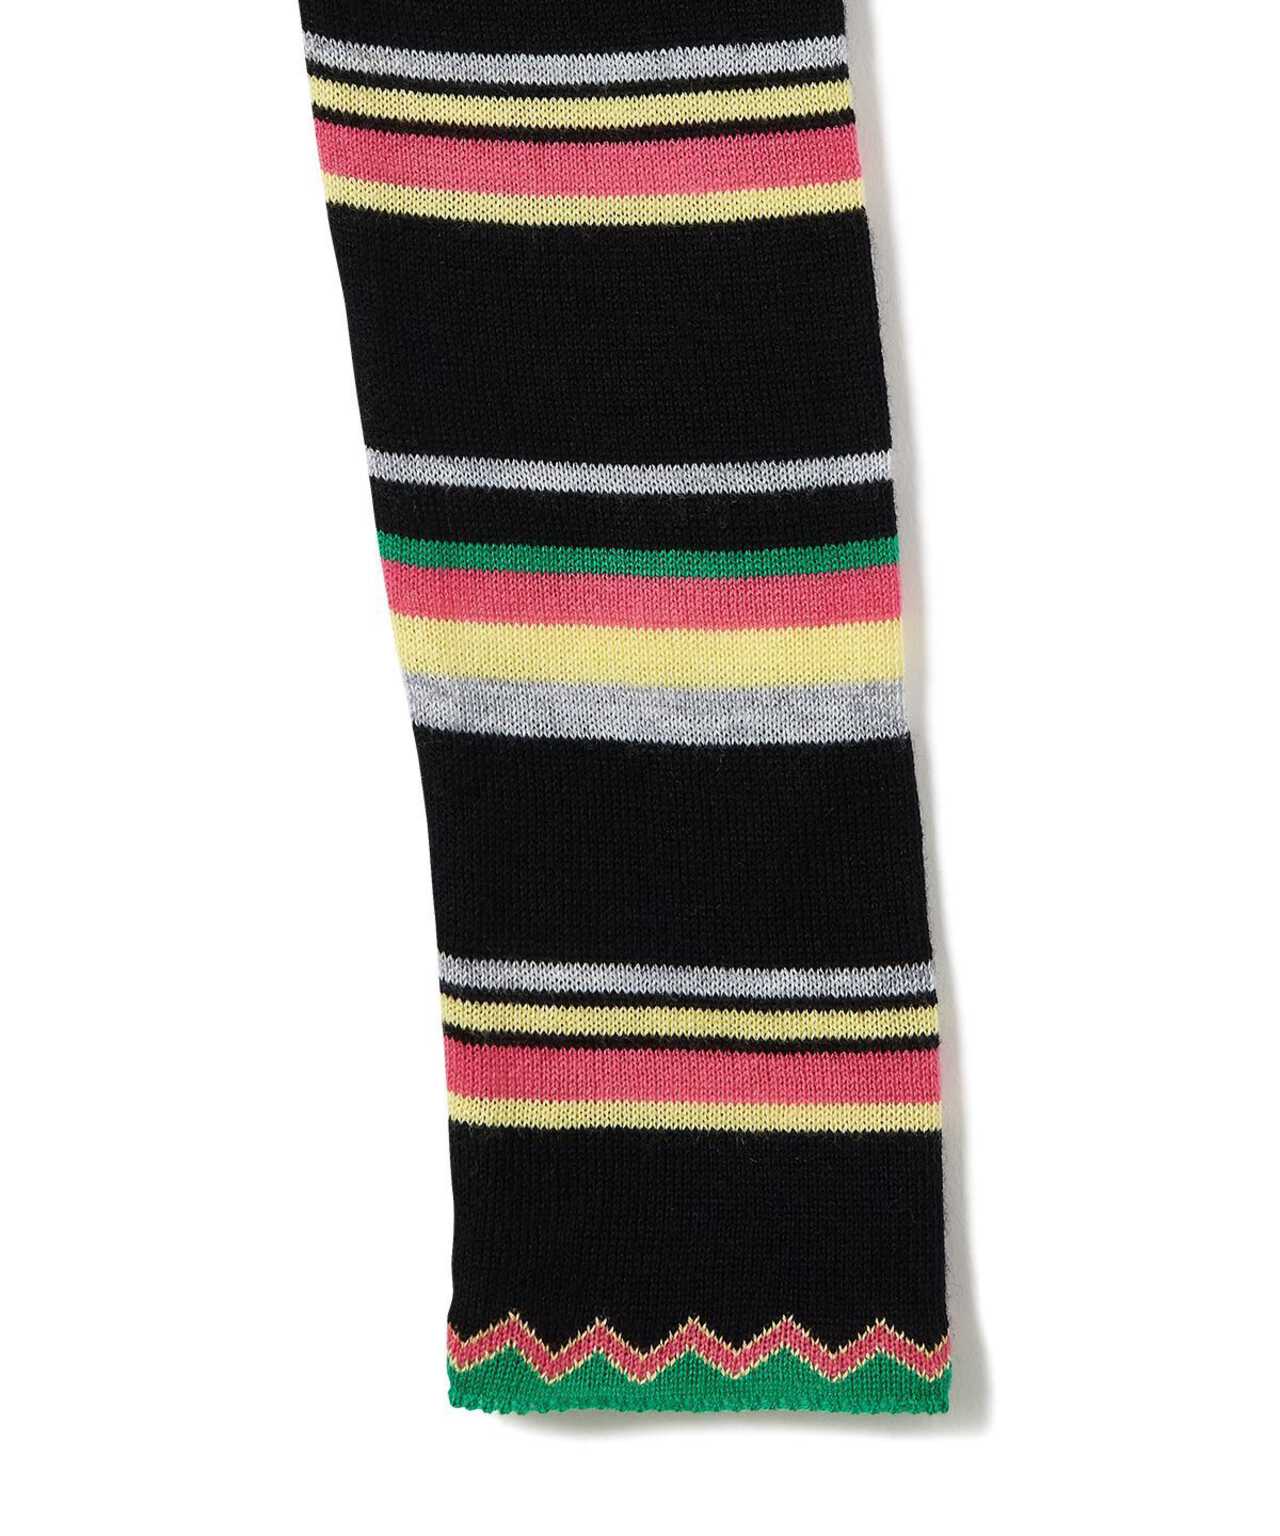 soduk/スドーク/multi color sleeve knit/マルチカラースリーブニット 